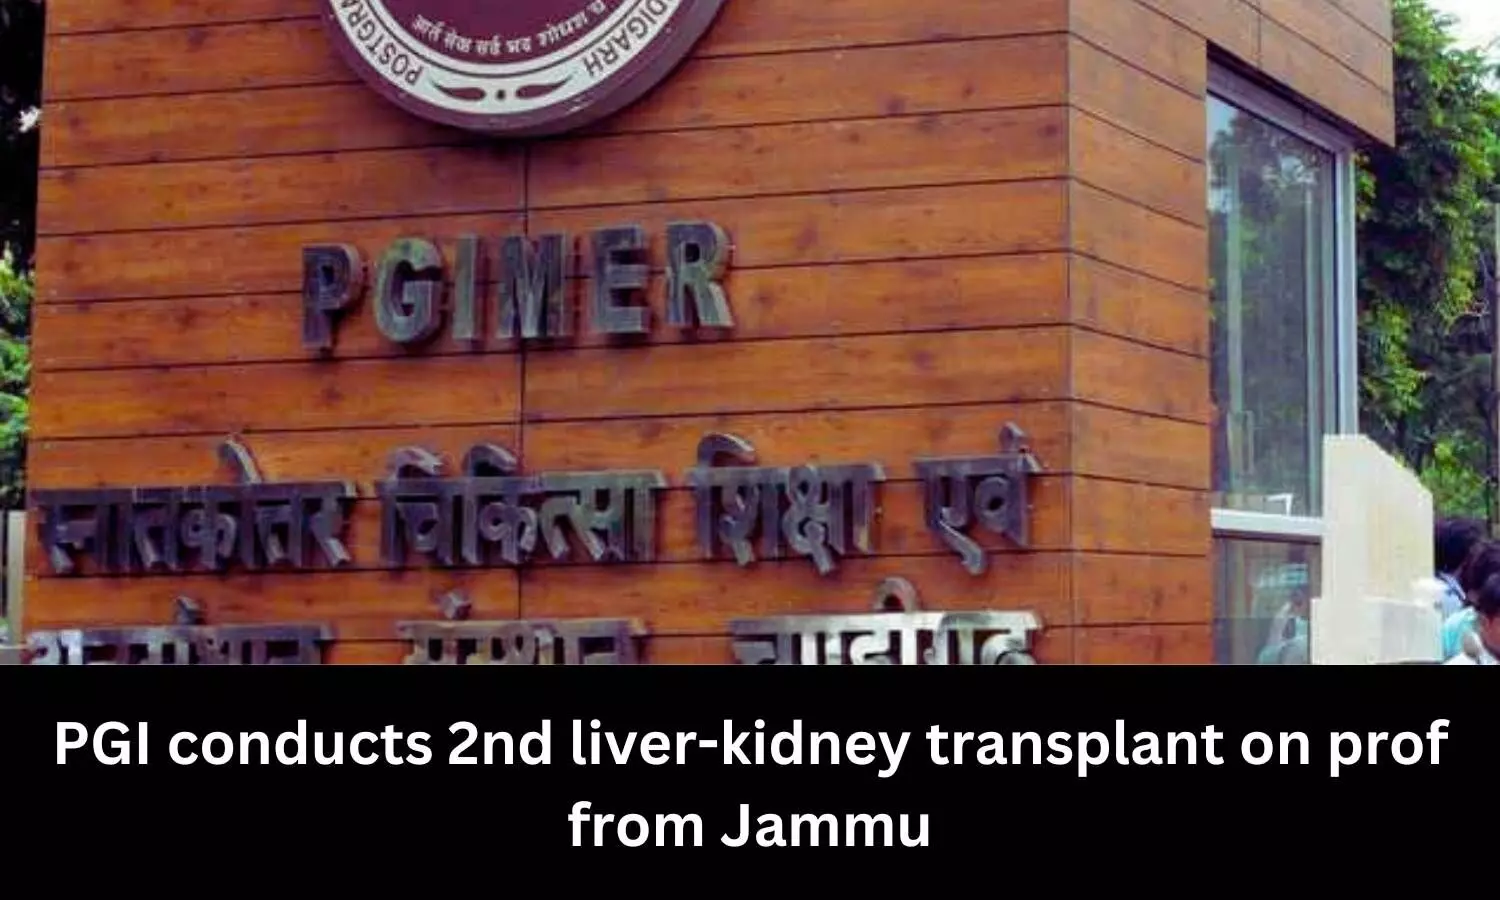 PGIMER conducts second liver-kidney transplant on Jammu man